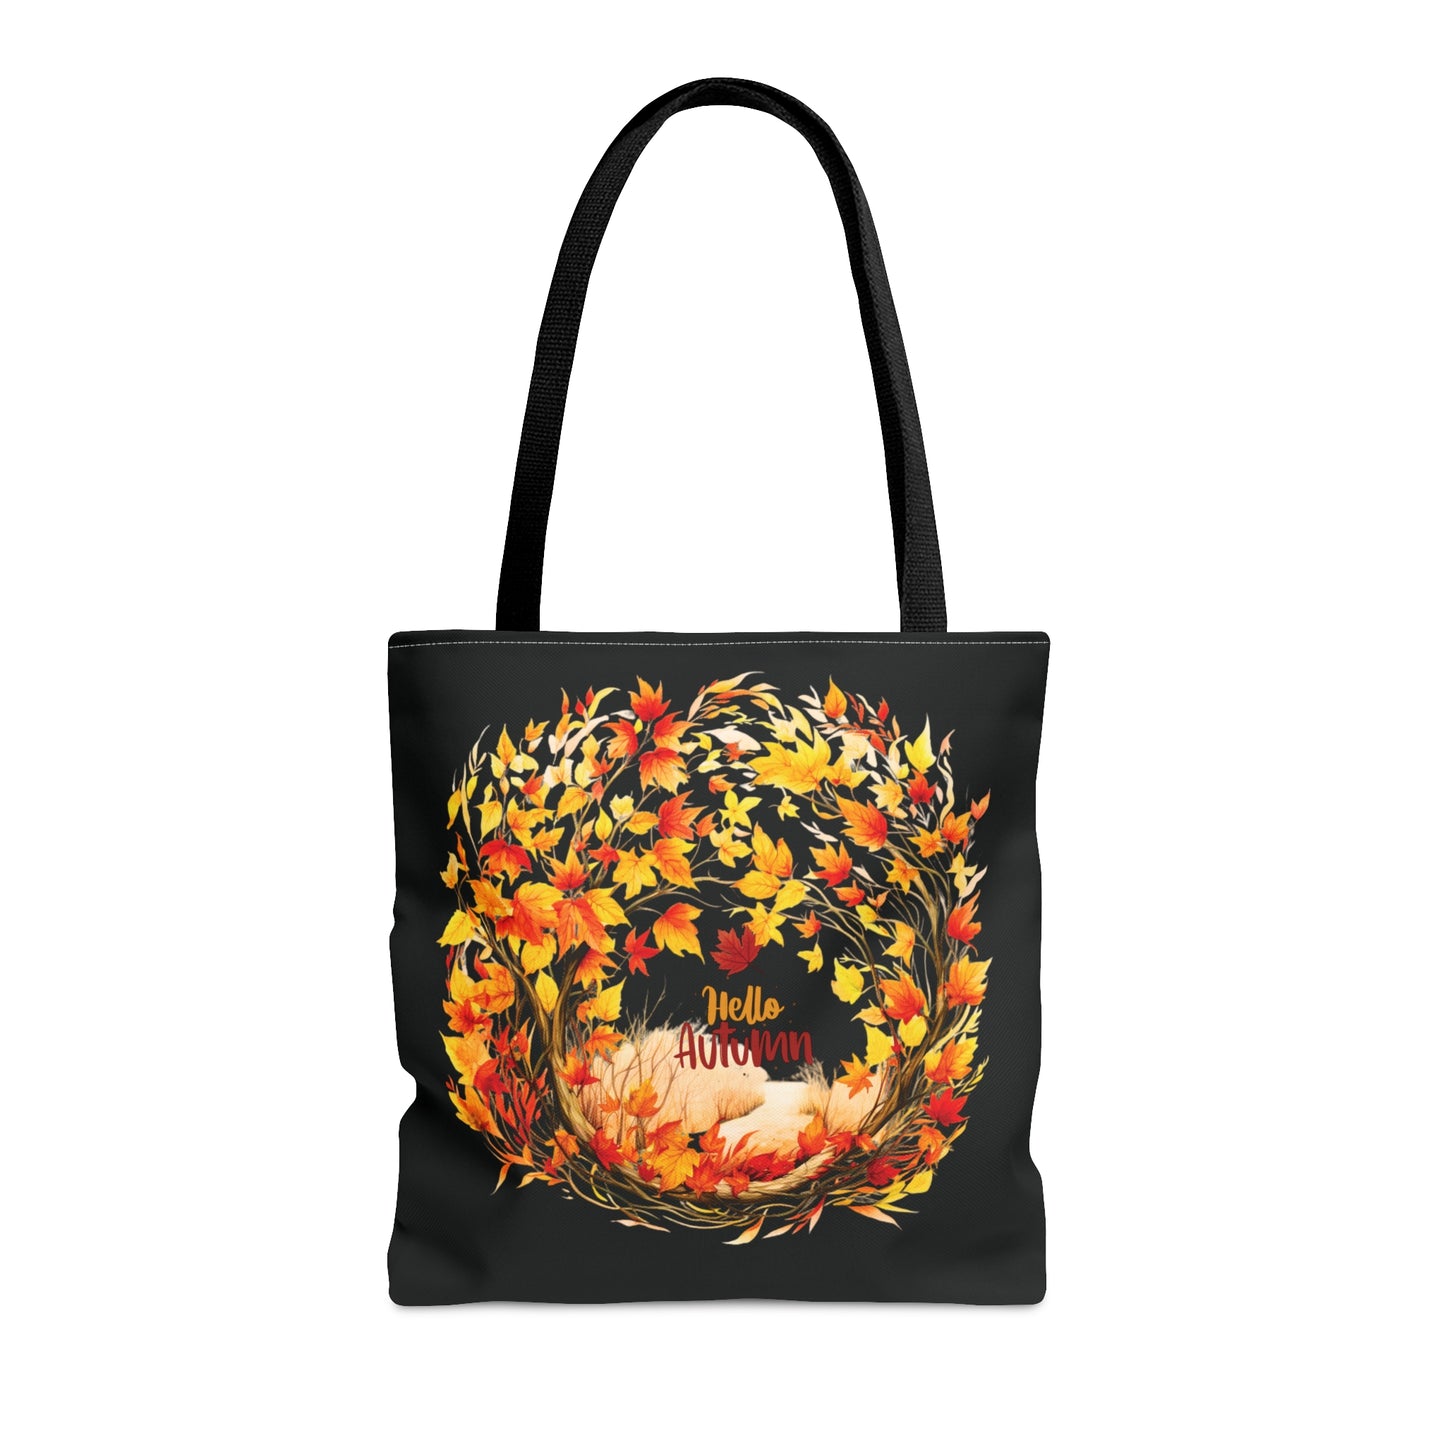 Hello Autumn Tote Bag - Fall Leaves Canvas Shopping Bag - Seasonal Fashion Accessory Bags Medium  